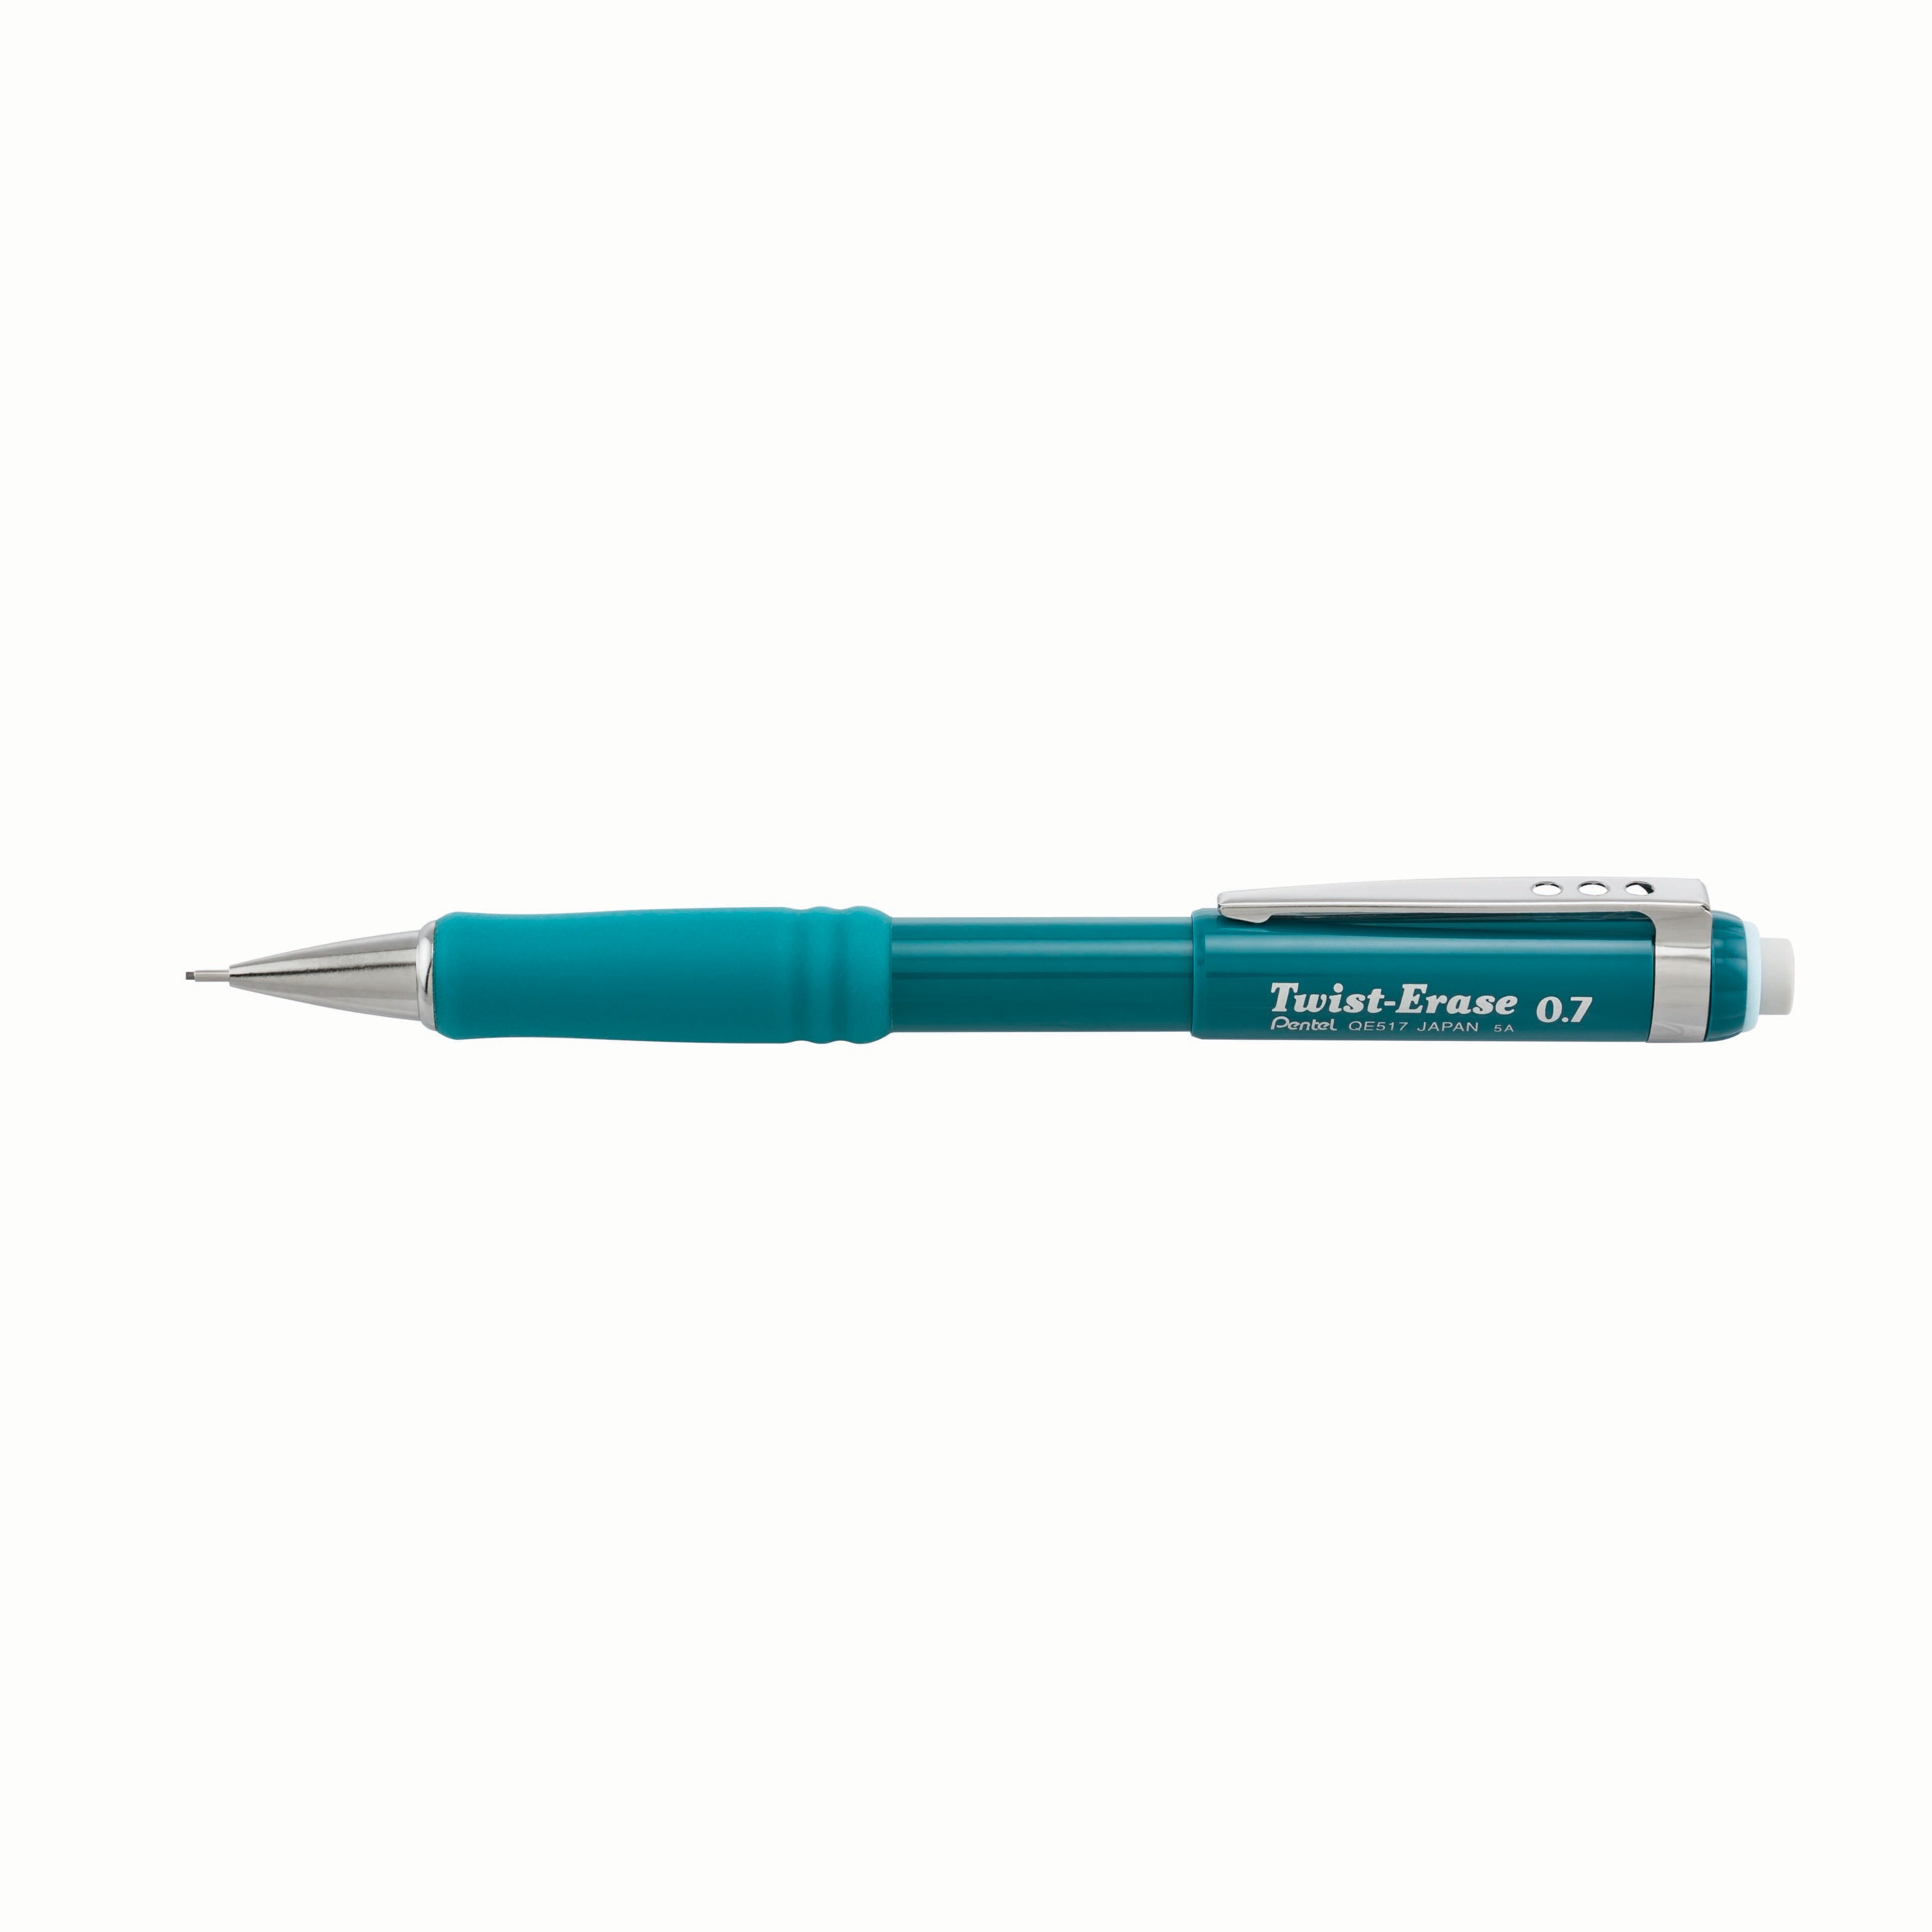 Pentel TwistErase III Mechanical Pencil 0.7mm Turquoise Barrel